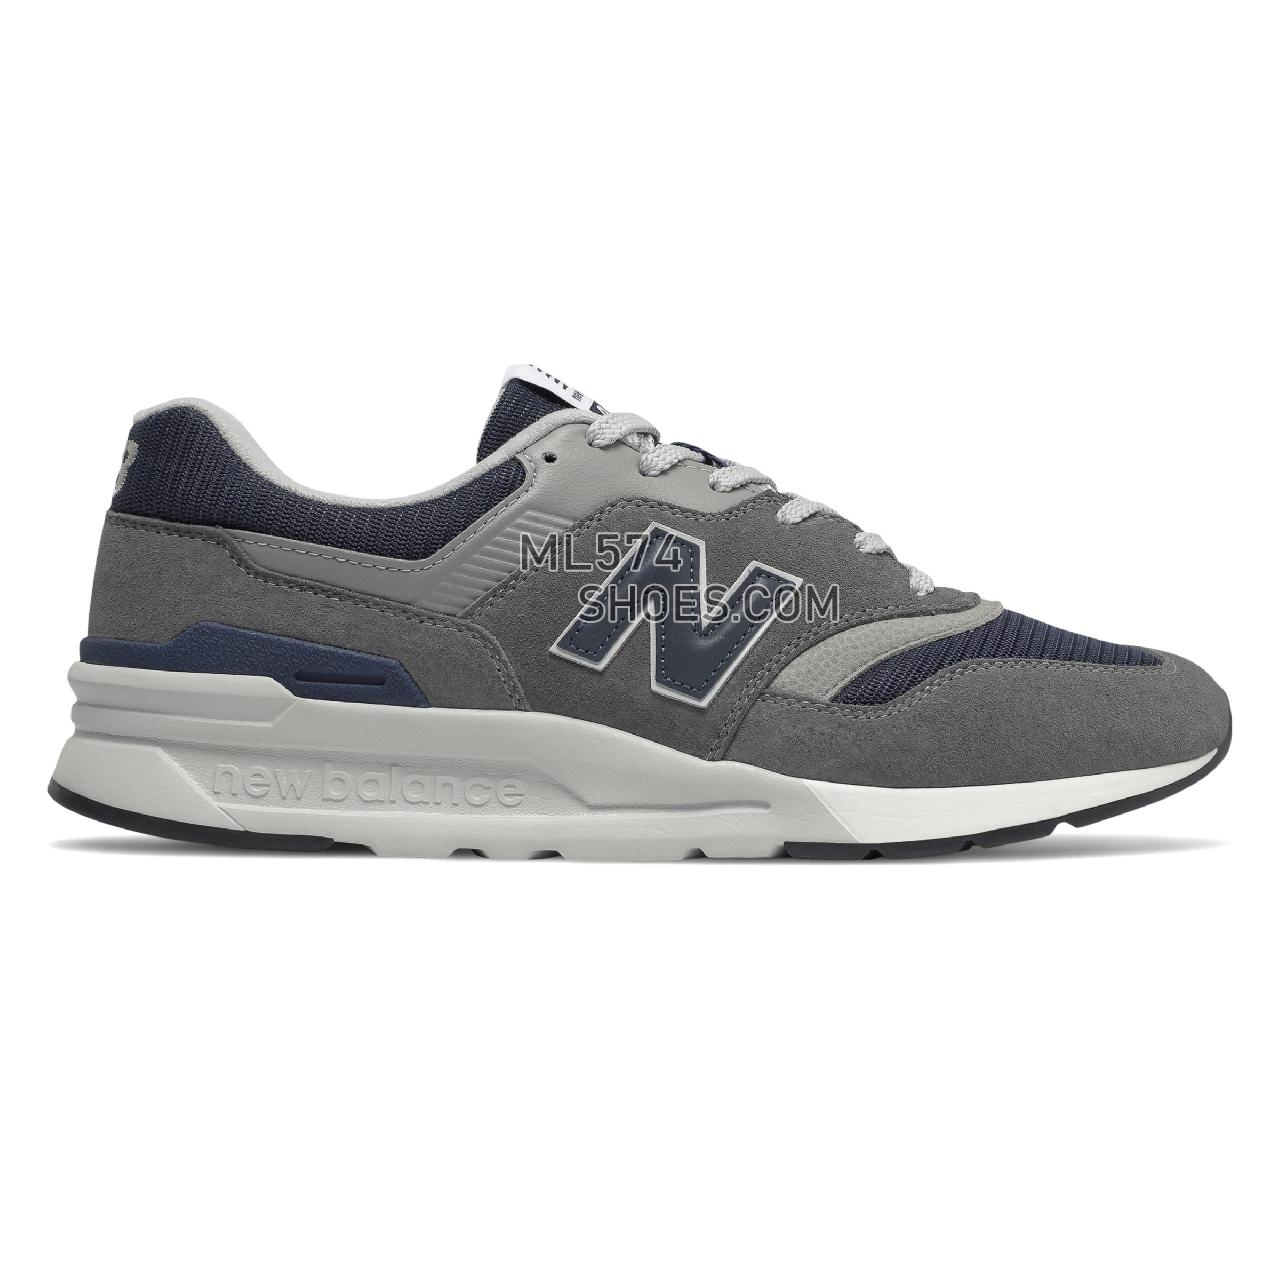 New Balance 997H - Men's Classic Sneakers - Castlerock with Natural Indigo - CM997HAX